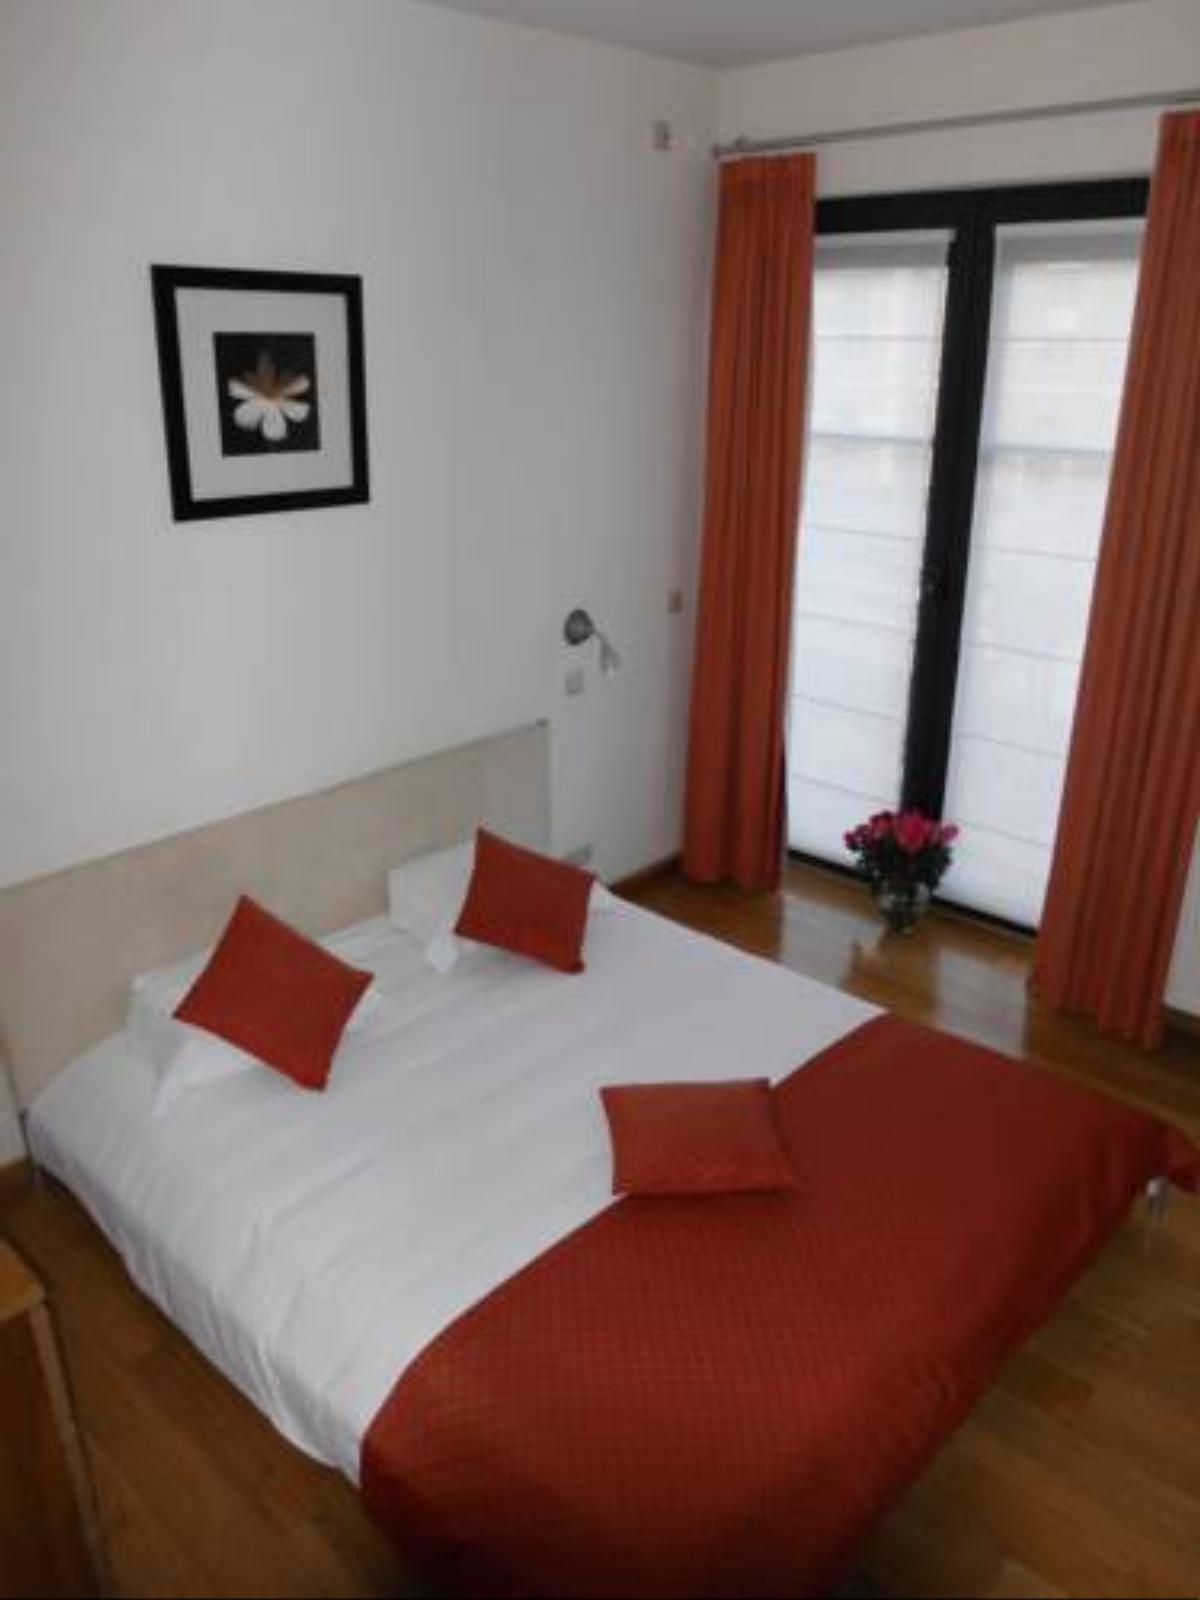 Rooms & Apartments Housingbrussels Hotel Brussels Belgium